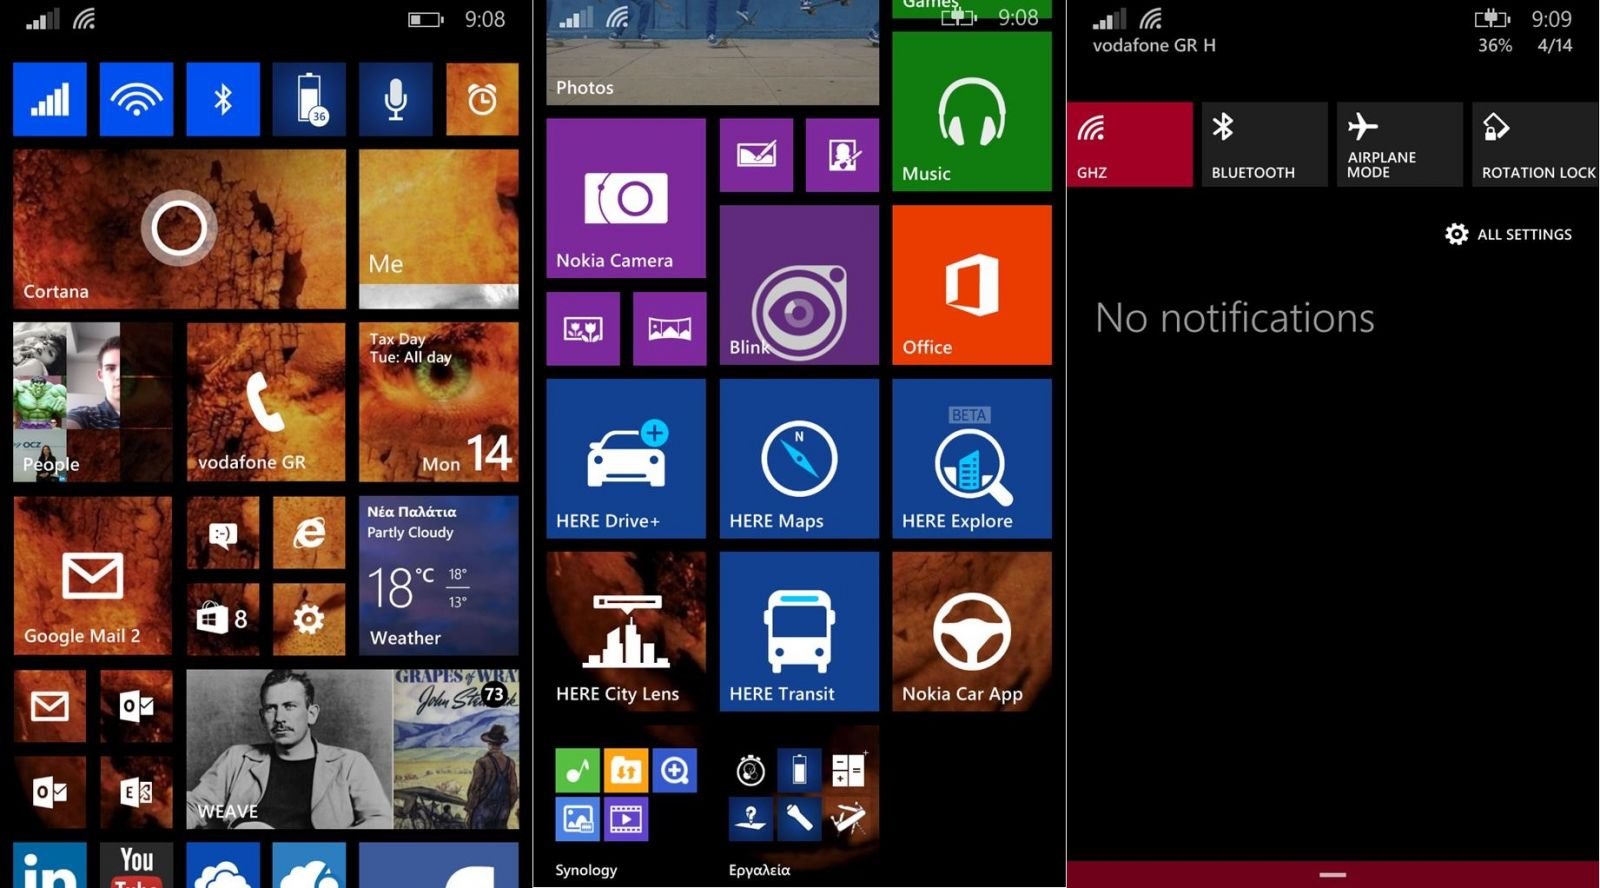 Windows Phone 8.1 Developer Preview